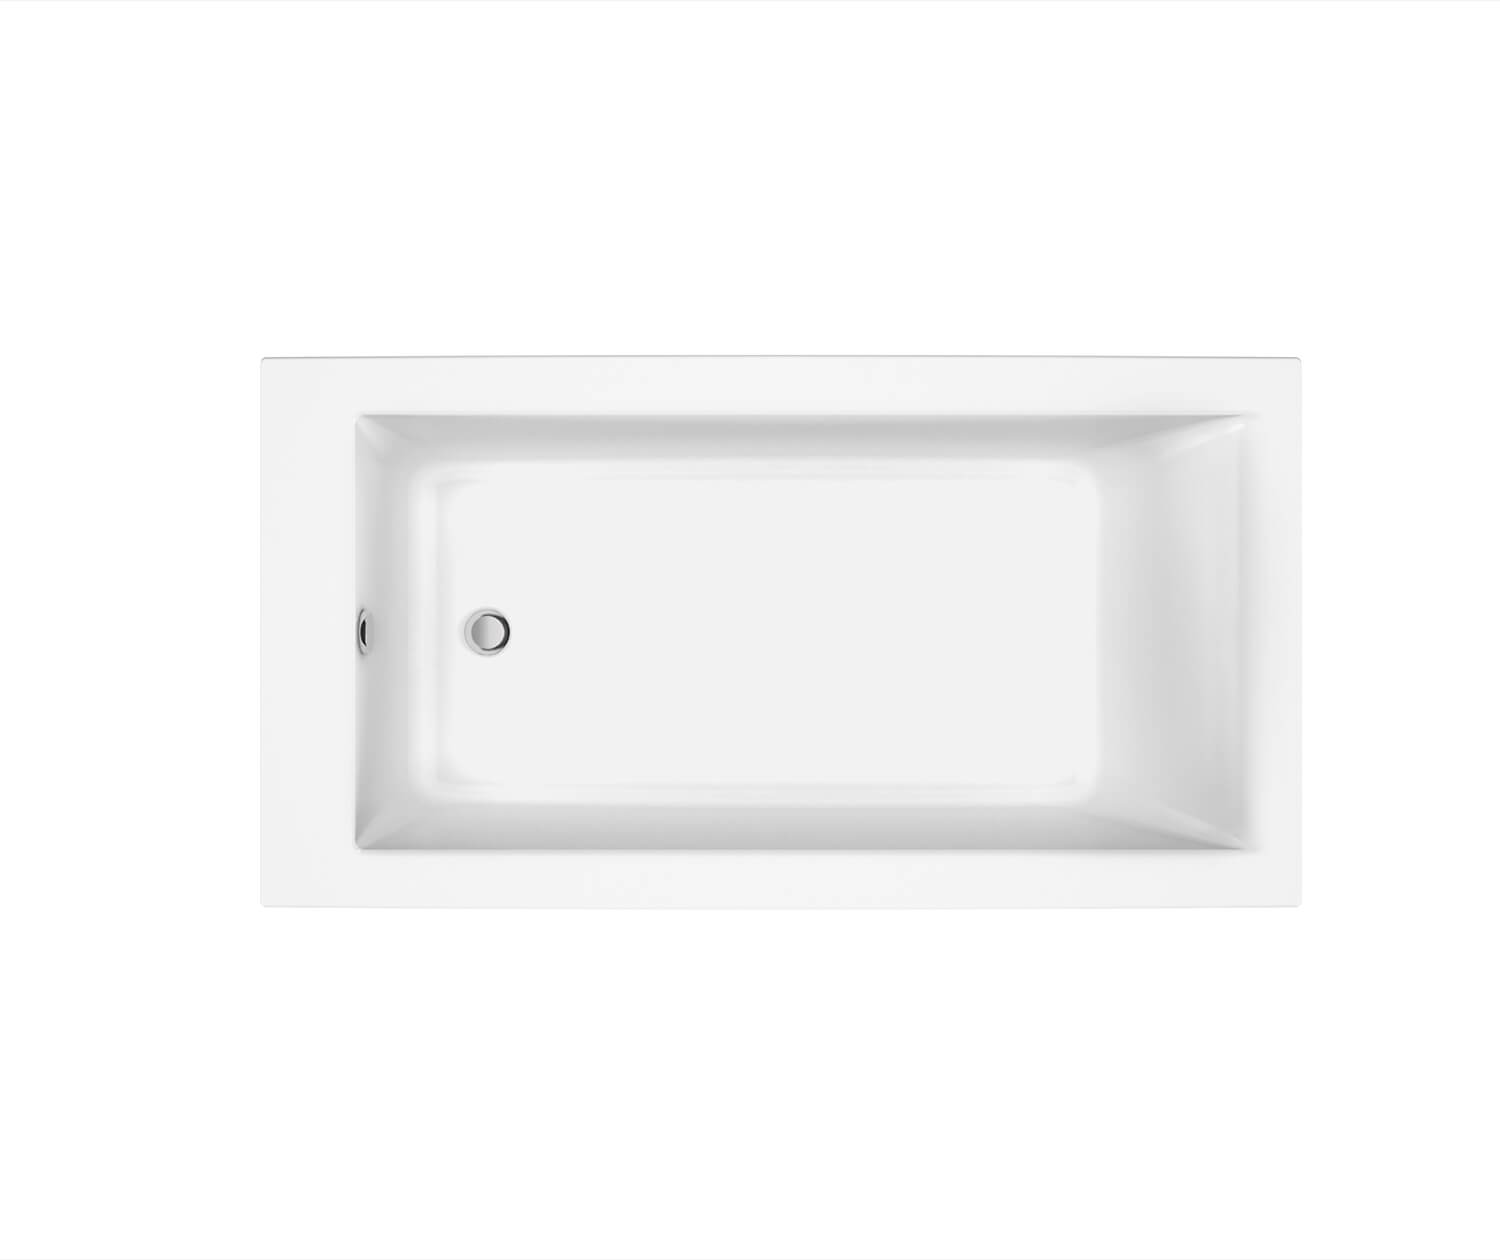 Elinor 60 x 32 AcrylX Freestanding End Drain Bathtub in White with 